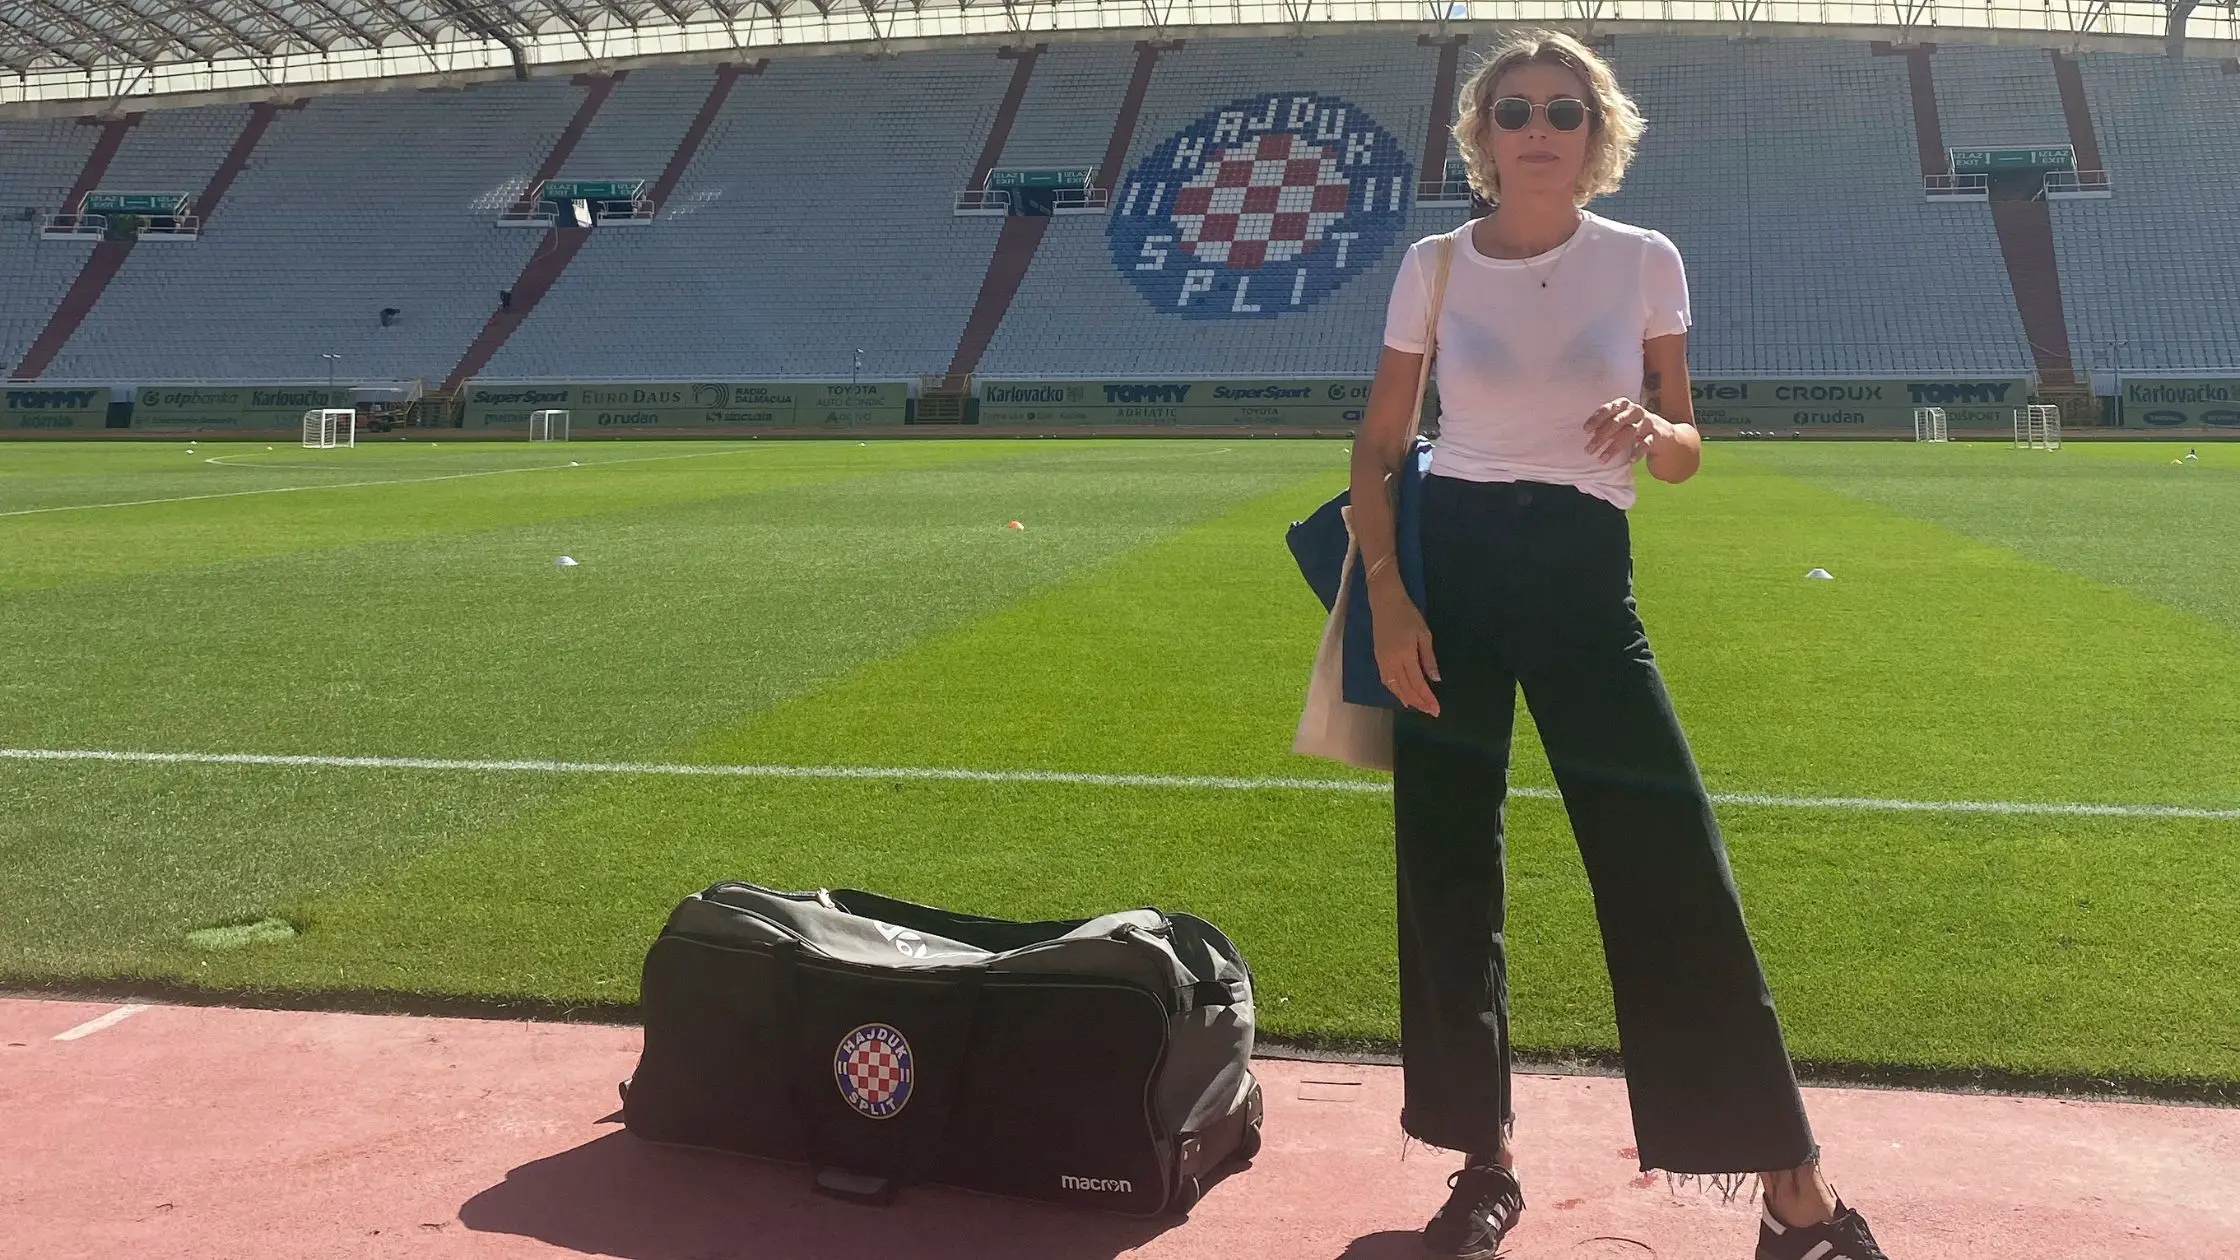 Poljud and Maksimir declared Croatian stadiums of national interest